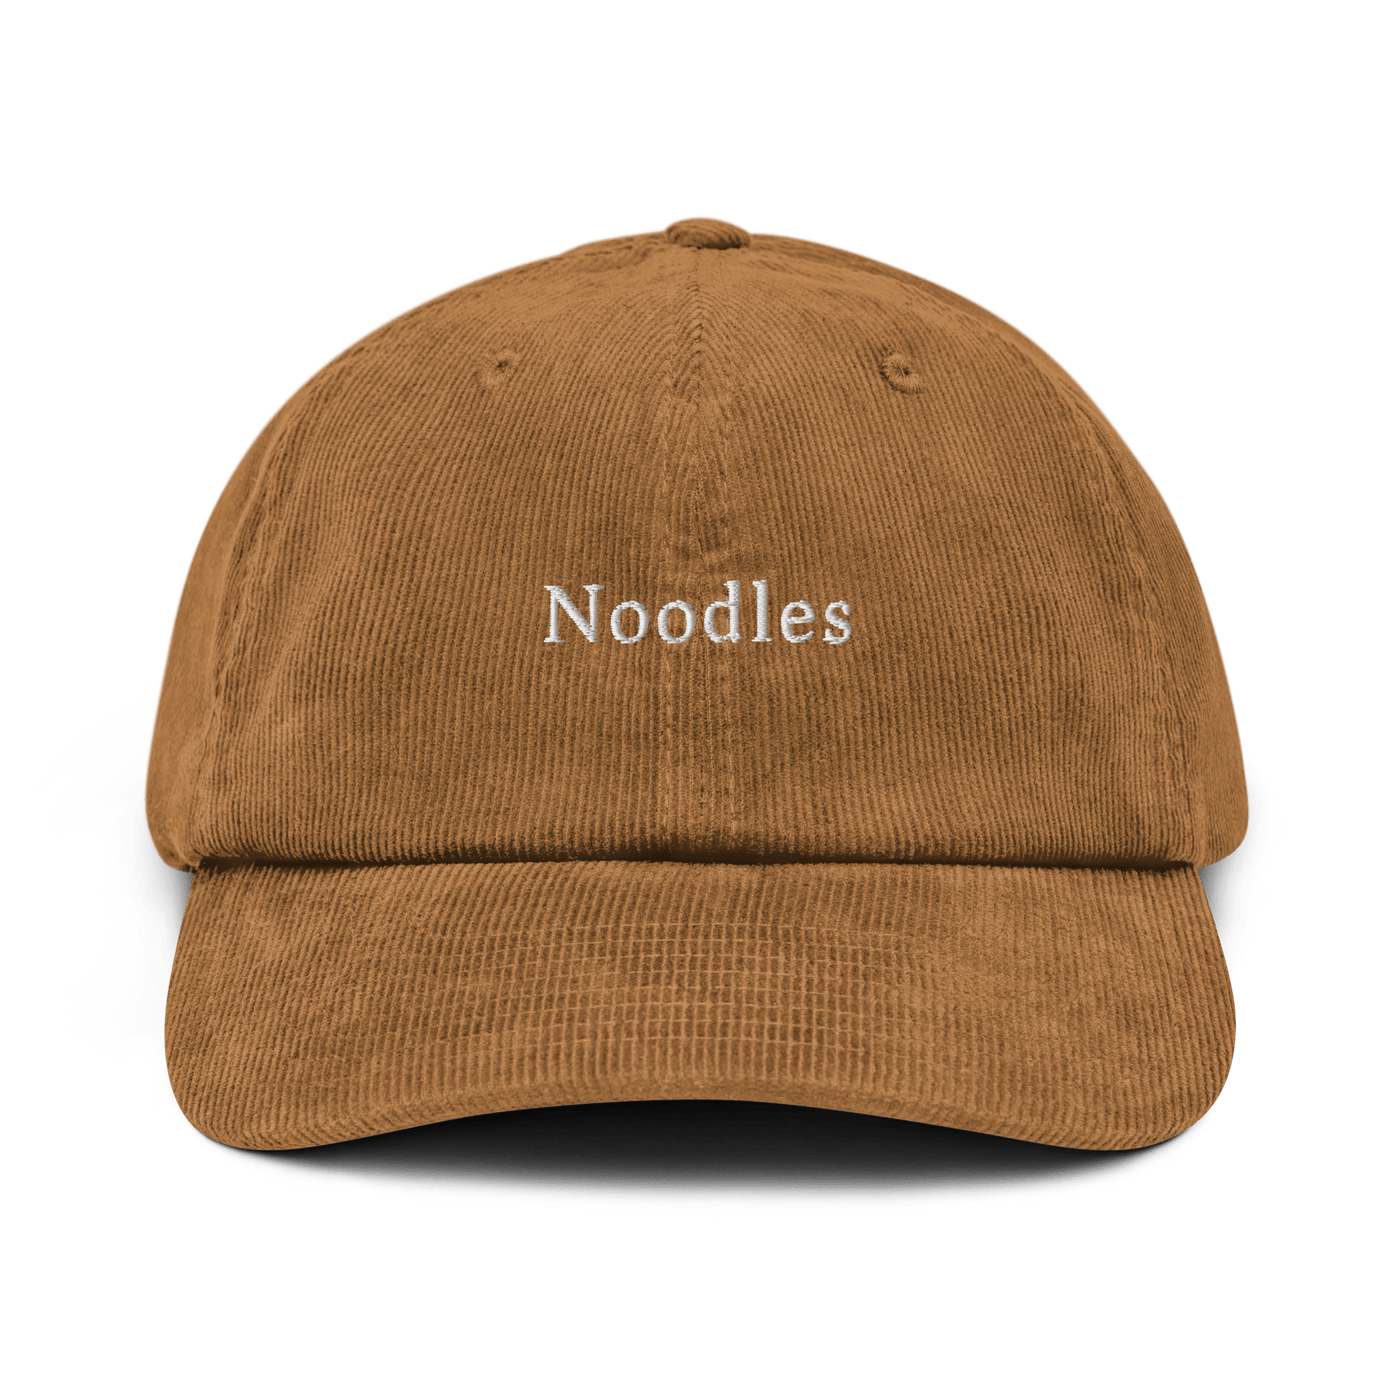 Noodles Corduroy hat - Camel - - Just Another Cap Store